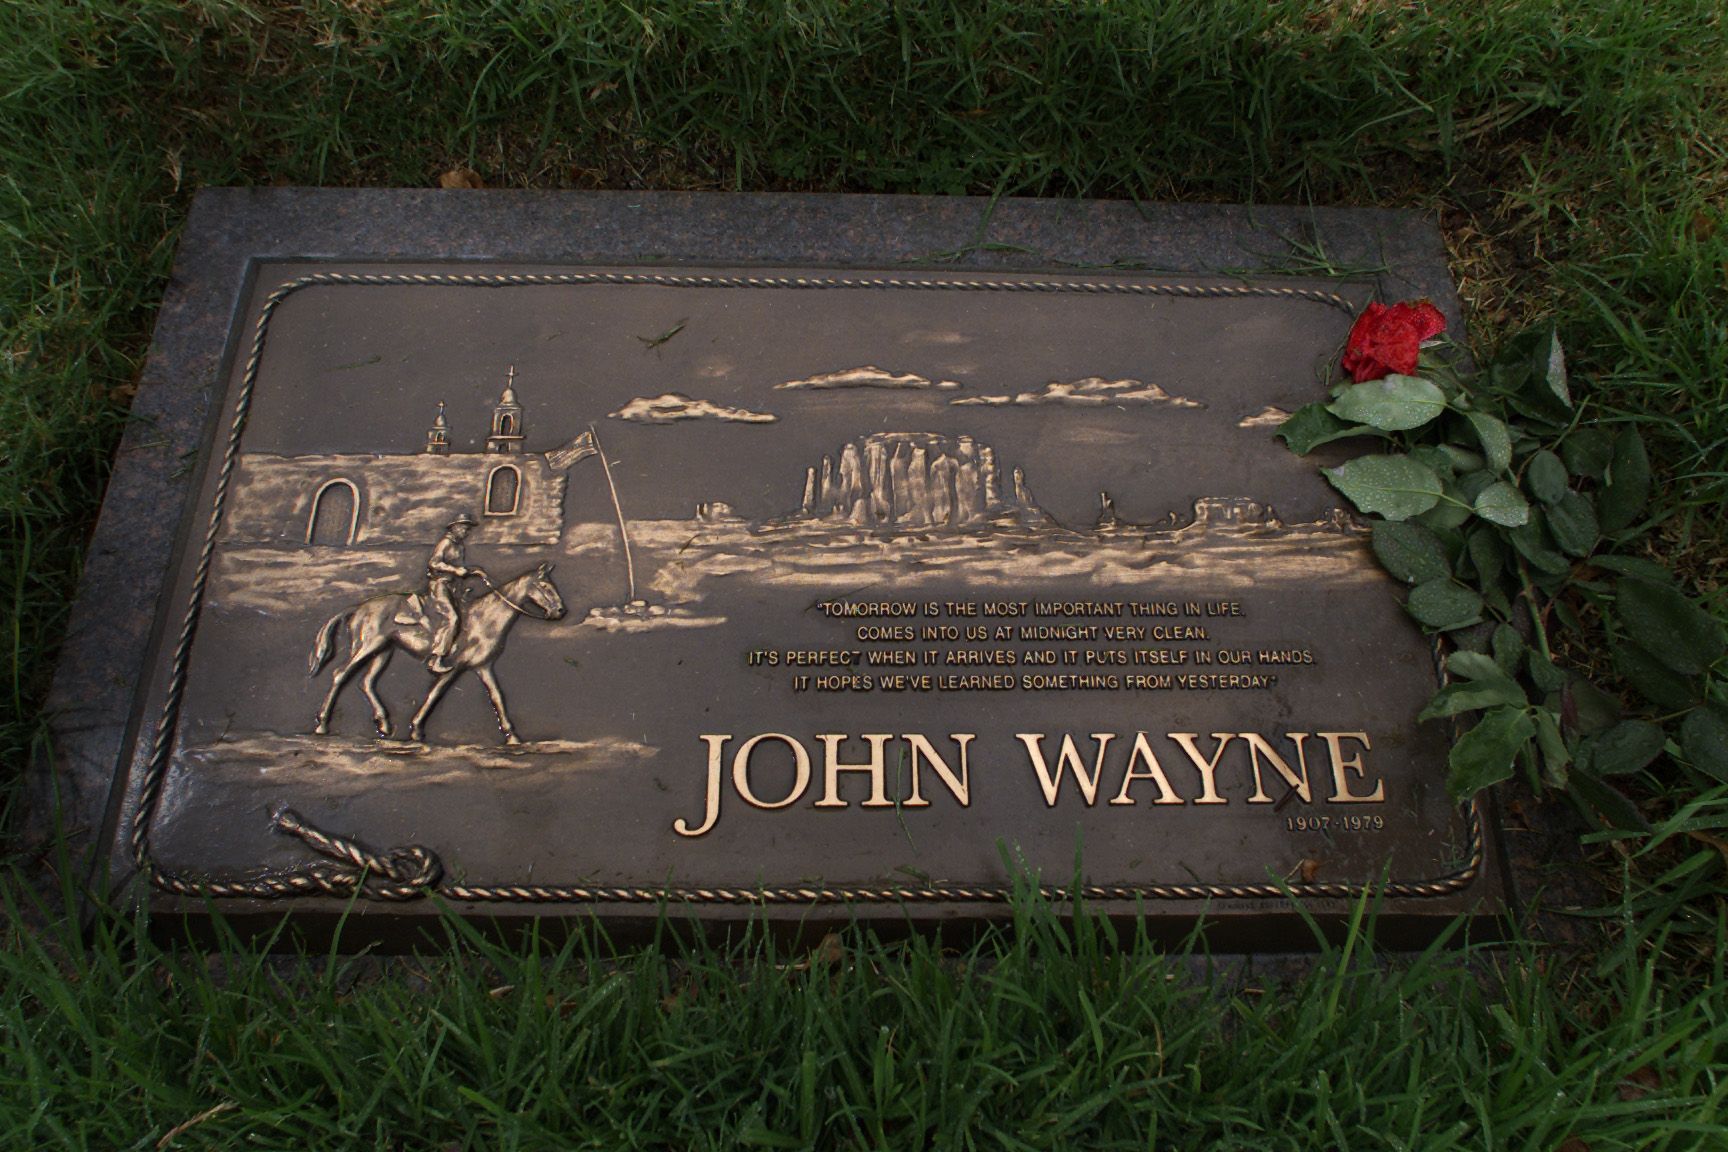 John Wayne's headstone at Pacific ViewMemorial Park in Newport Beach. | Source: Getty Images